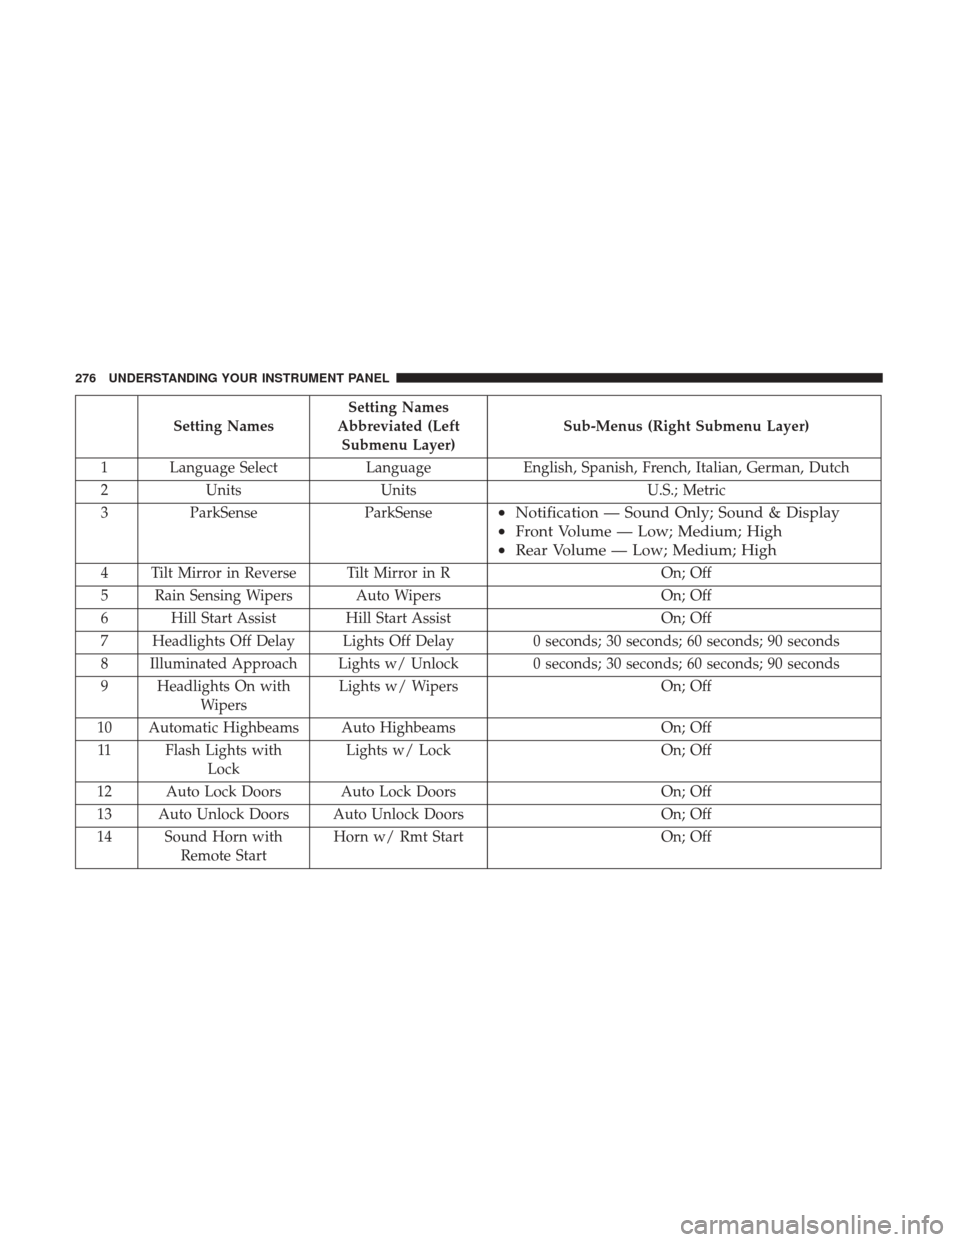 Ram 2500 2017  Owners Manual Setting NamesSetting Names
Abbreviated (Left Submenu Layer) Sub-Menus (Right Submenu Layer)
1 Language Select LanguageEnglish, Spanish, French, Italian, German, Dutch
2 Units Units U.S.; Metric
3 Park